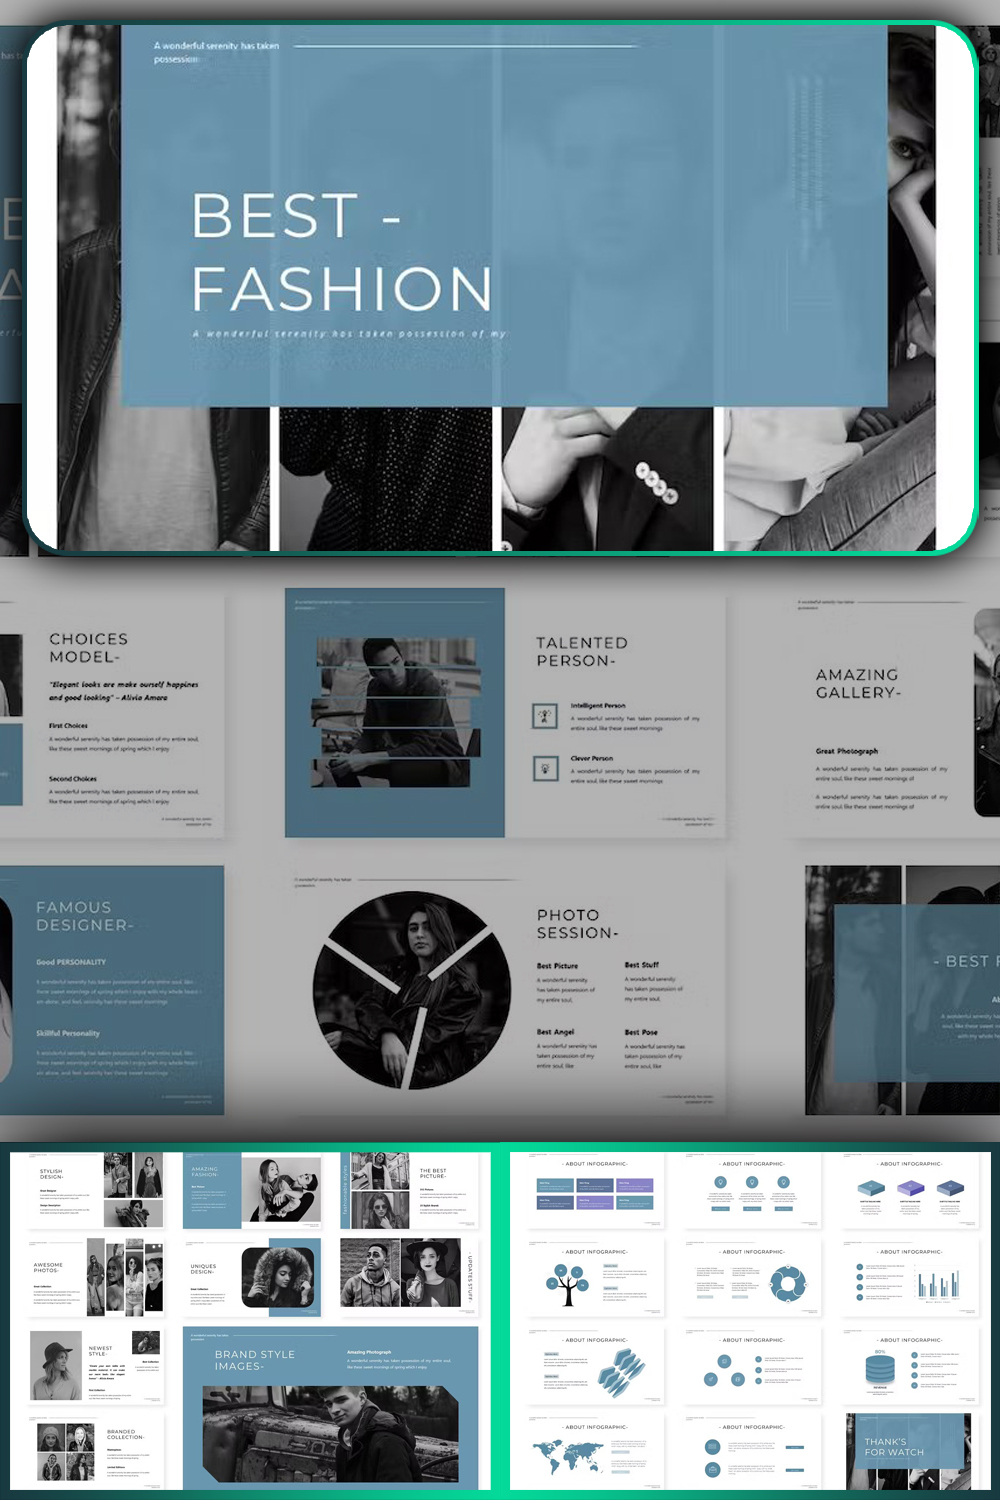 Best Fashion | Google Slides Template - Pinterest.